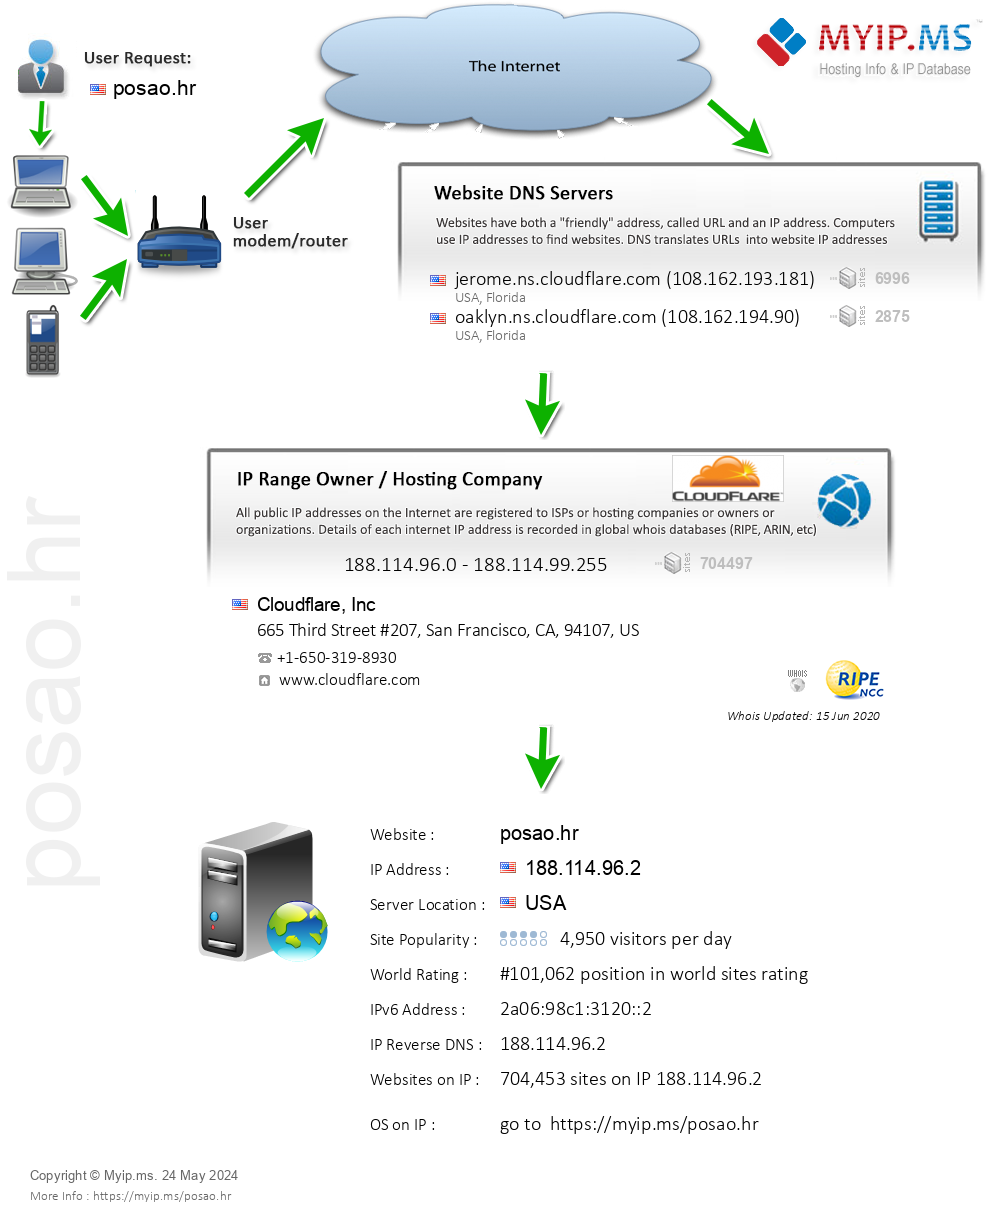 Posao.hr - Website Hosting Visual IP Diagram